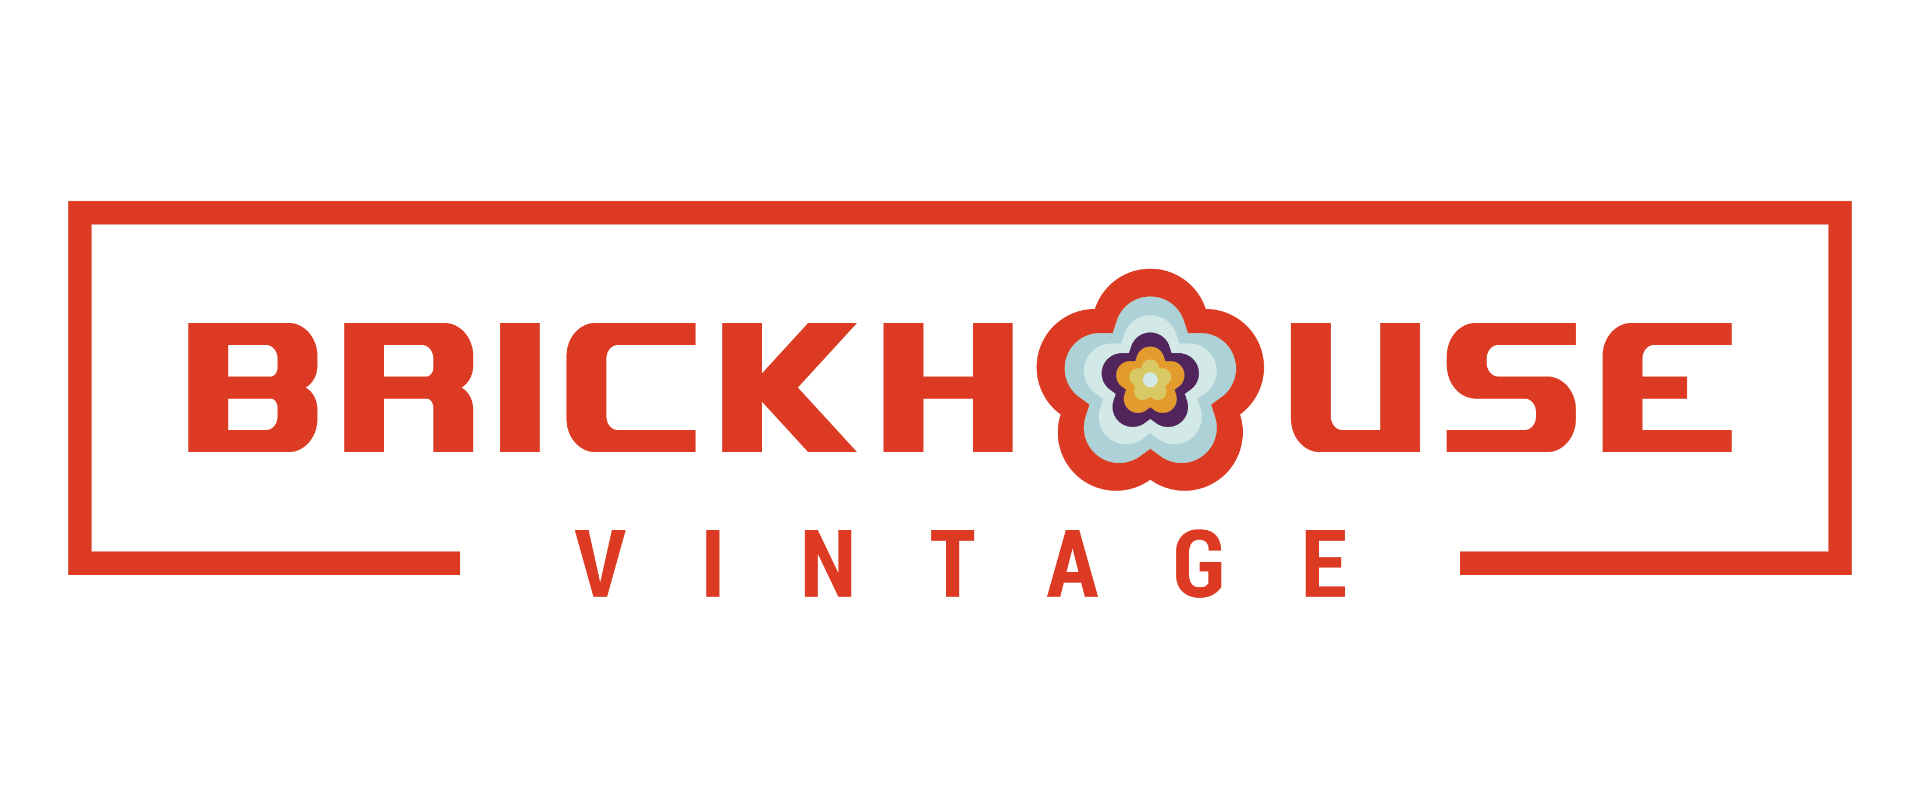 Brickhouse Vintage